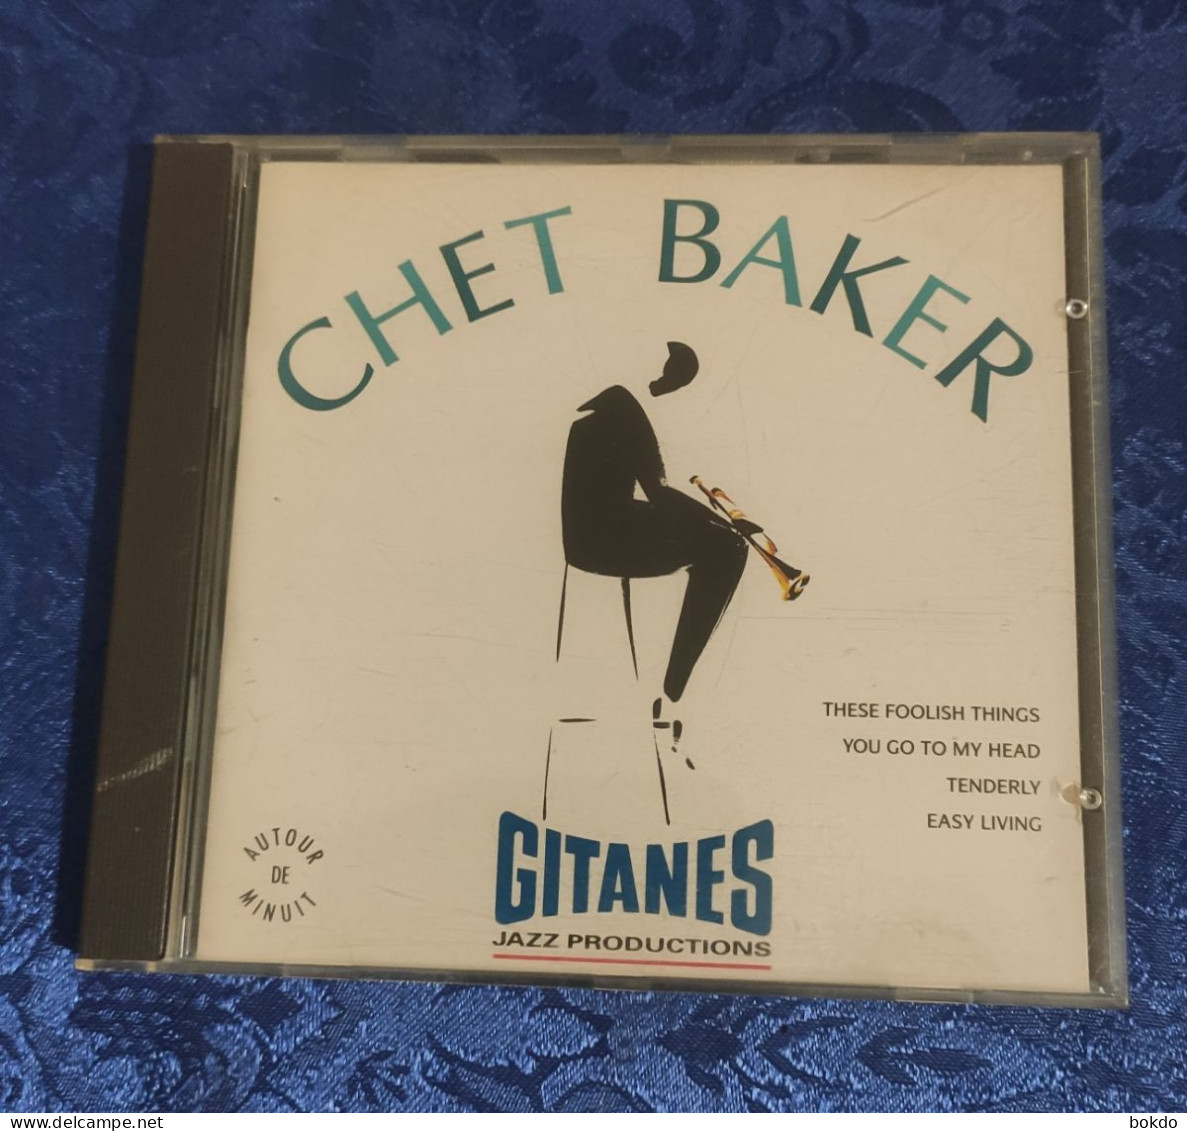 CHET BAKER - Gitanes - Jazz Productions - Otros - Canción Inglesa